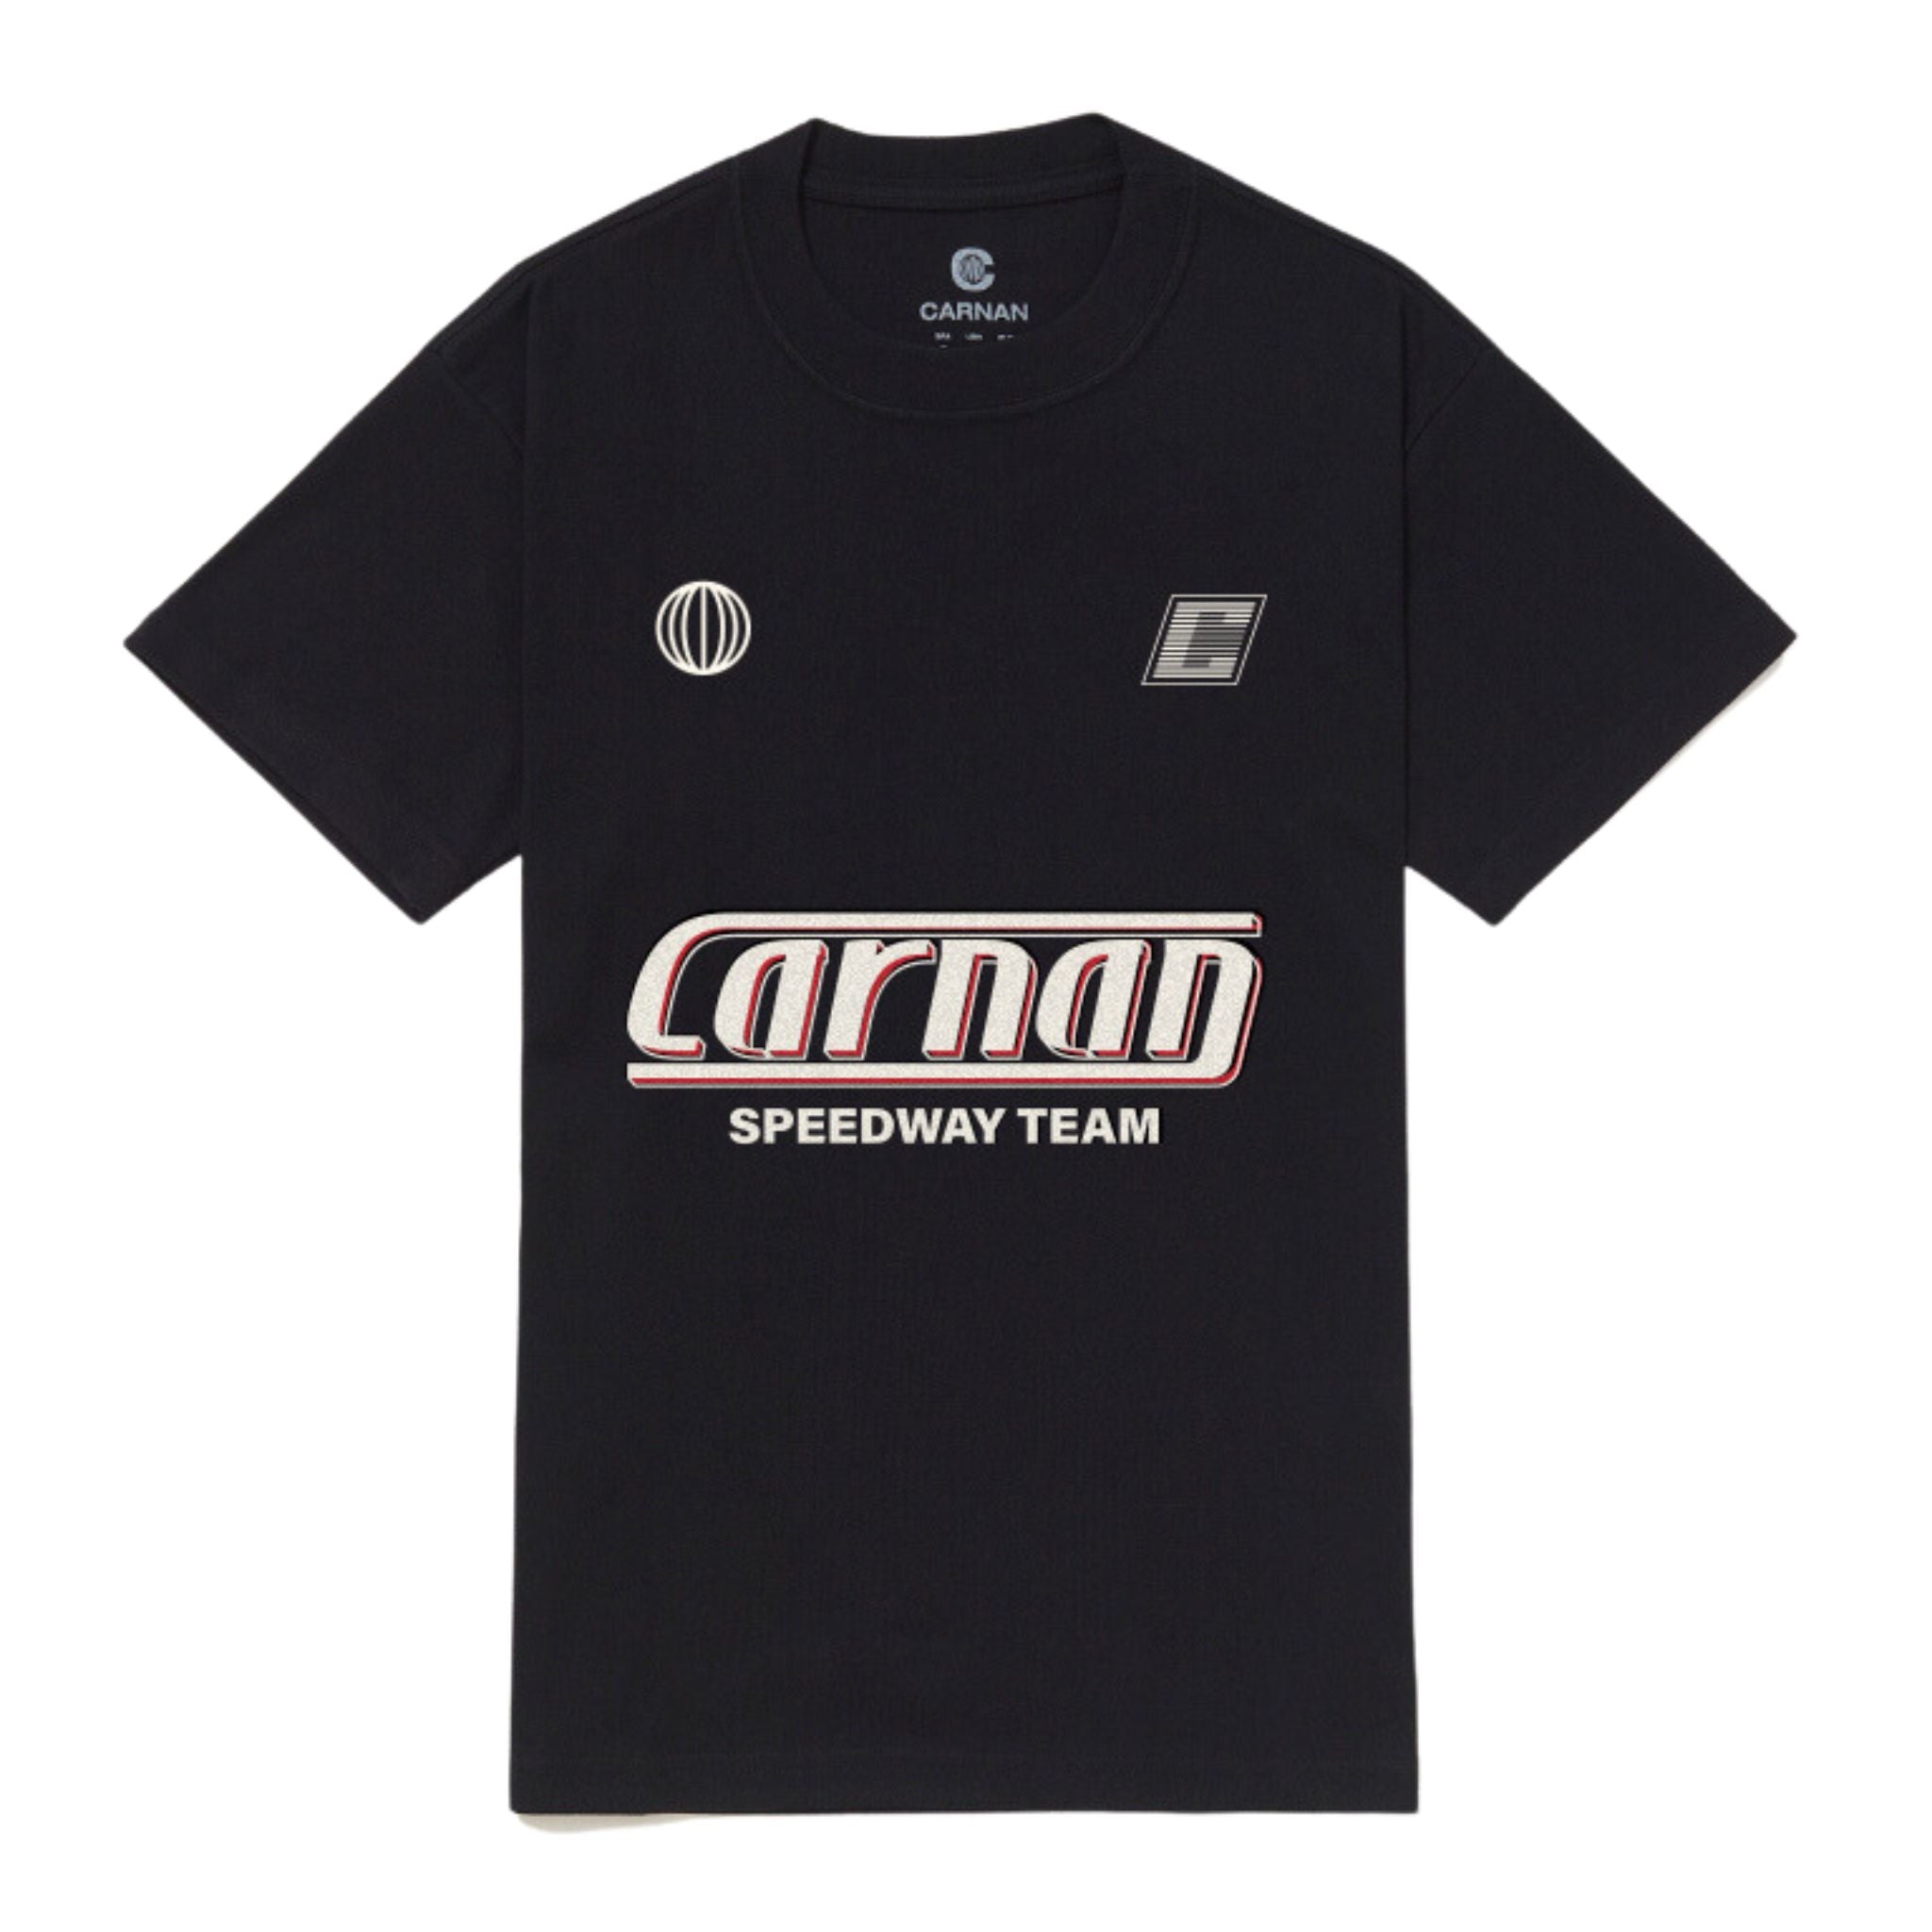 CARNAN - Heavy T-shirt Speedway Team "Black" - THE GAME